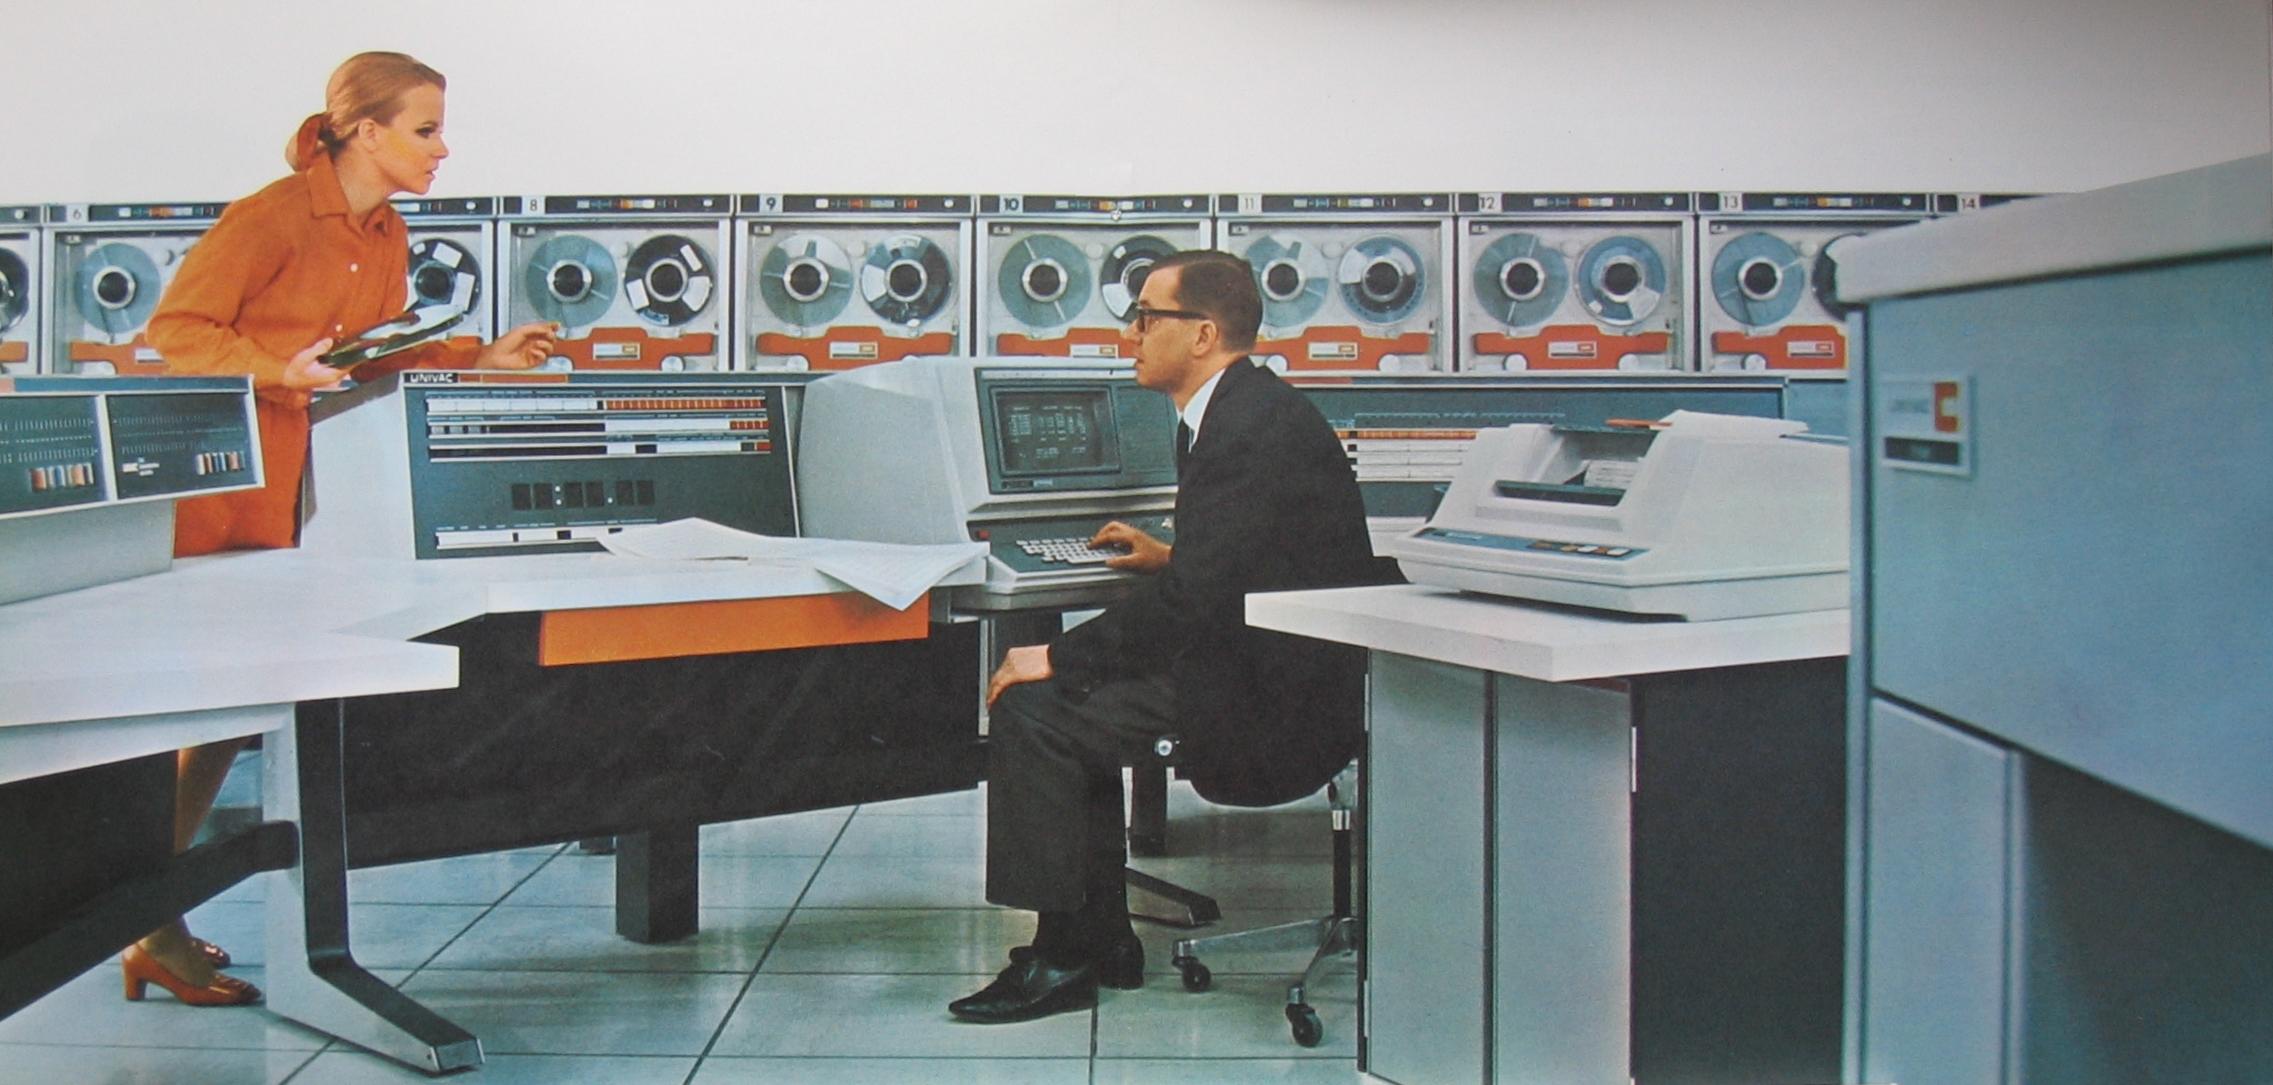 1970S Computers